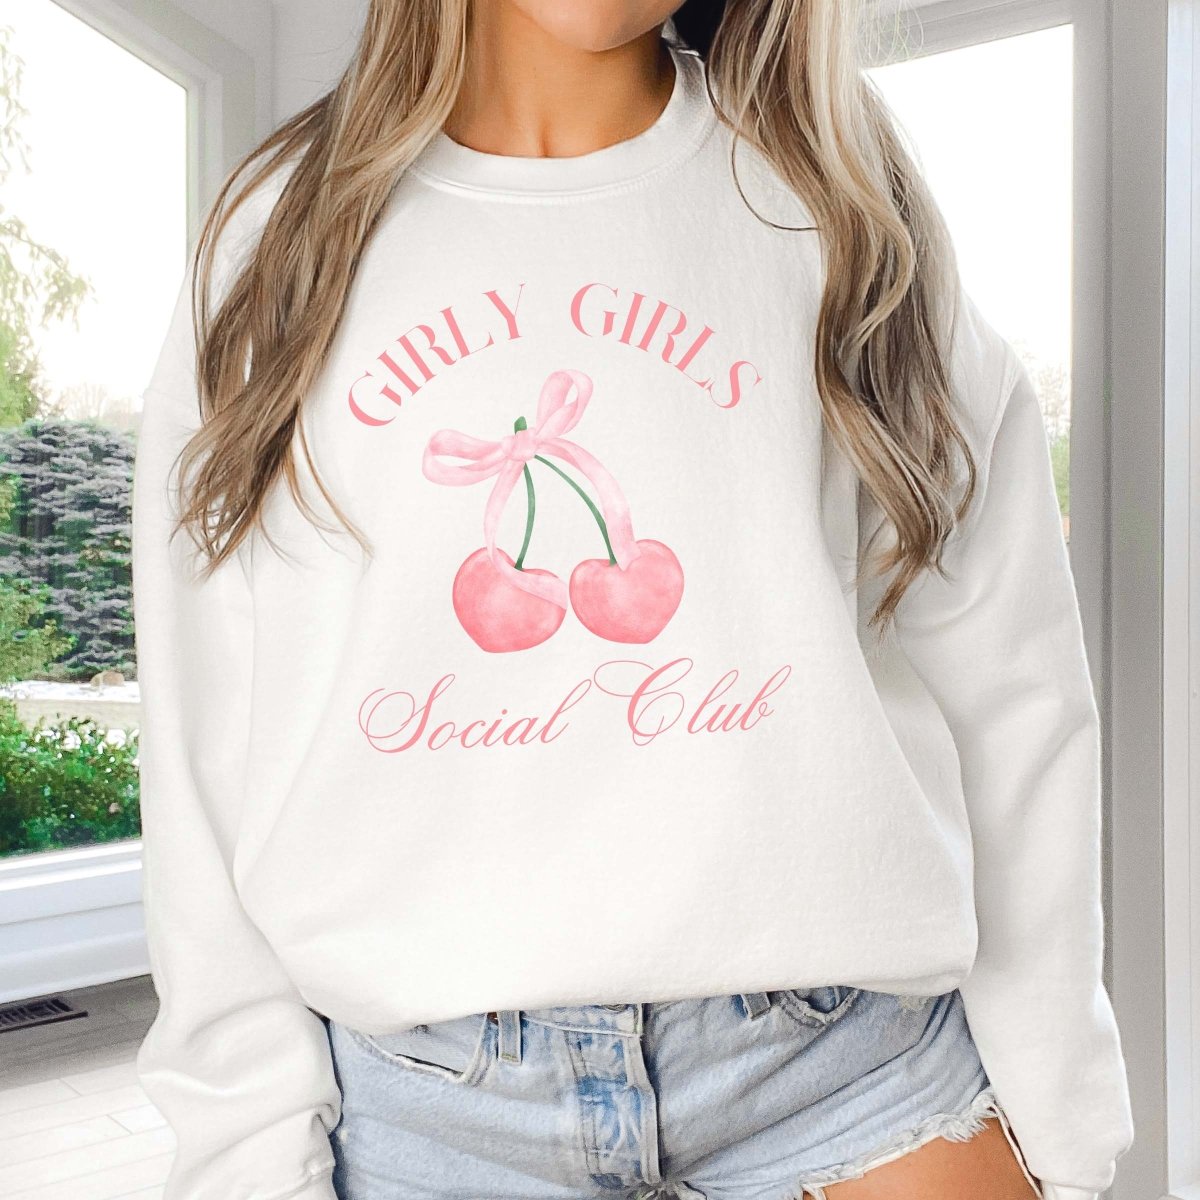 Girly Girls Social Club Sweatshirt - Limeberry Designs